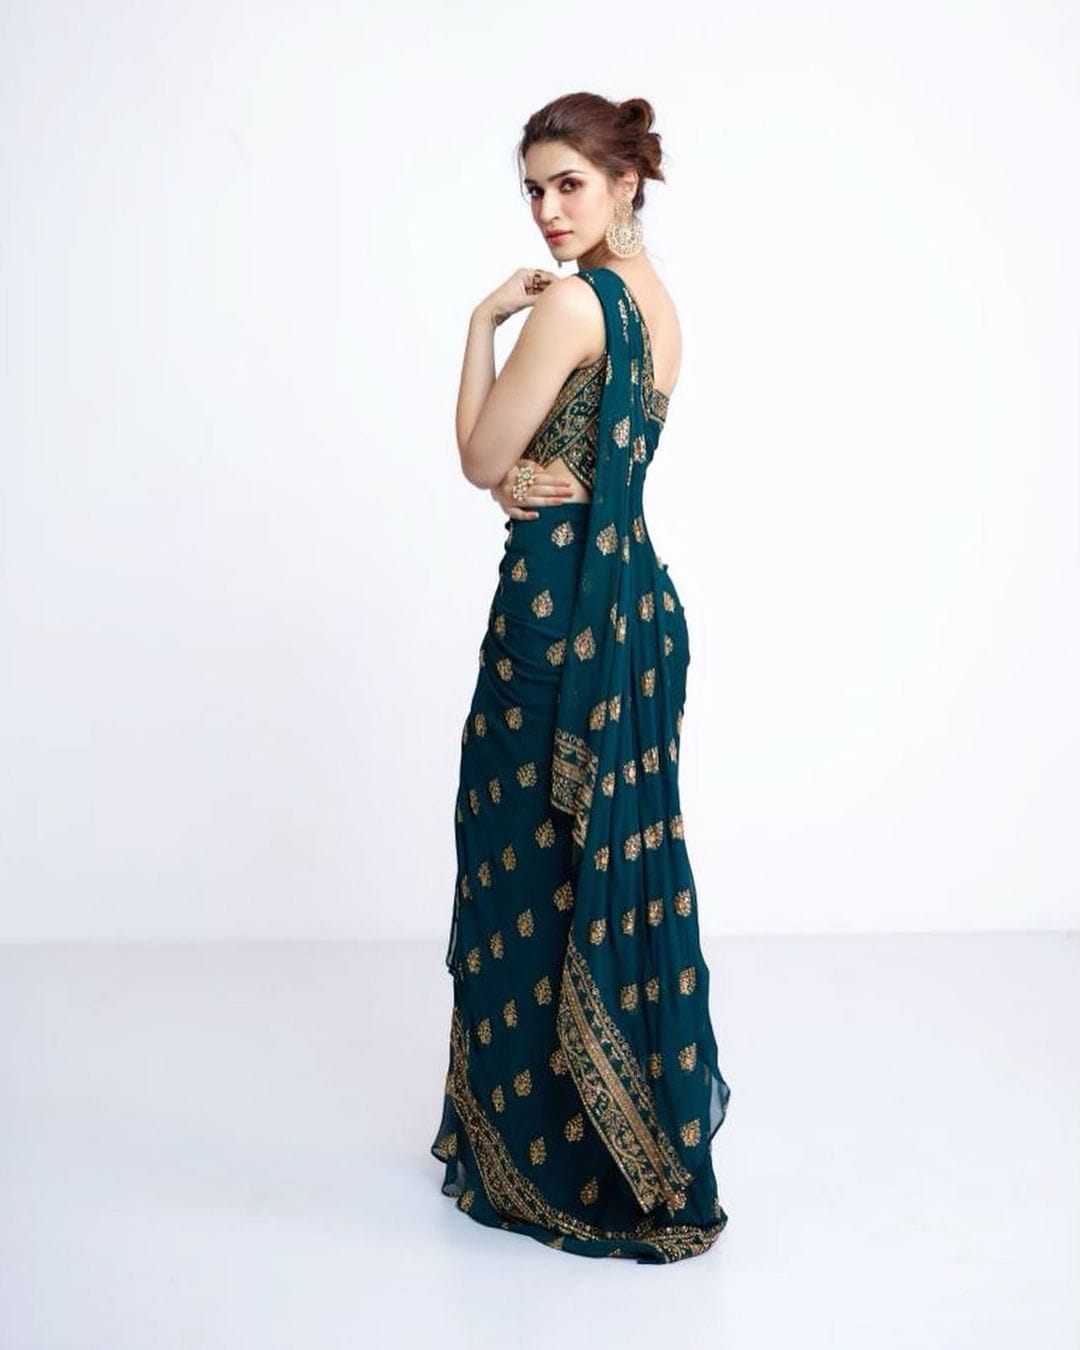 Buy AREZU FASHION Girls' Peacock Green Printed Jacquard Gown Maxi Dress | Peacock  Green | 26 | at Amazon.in